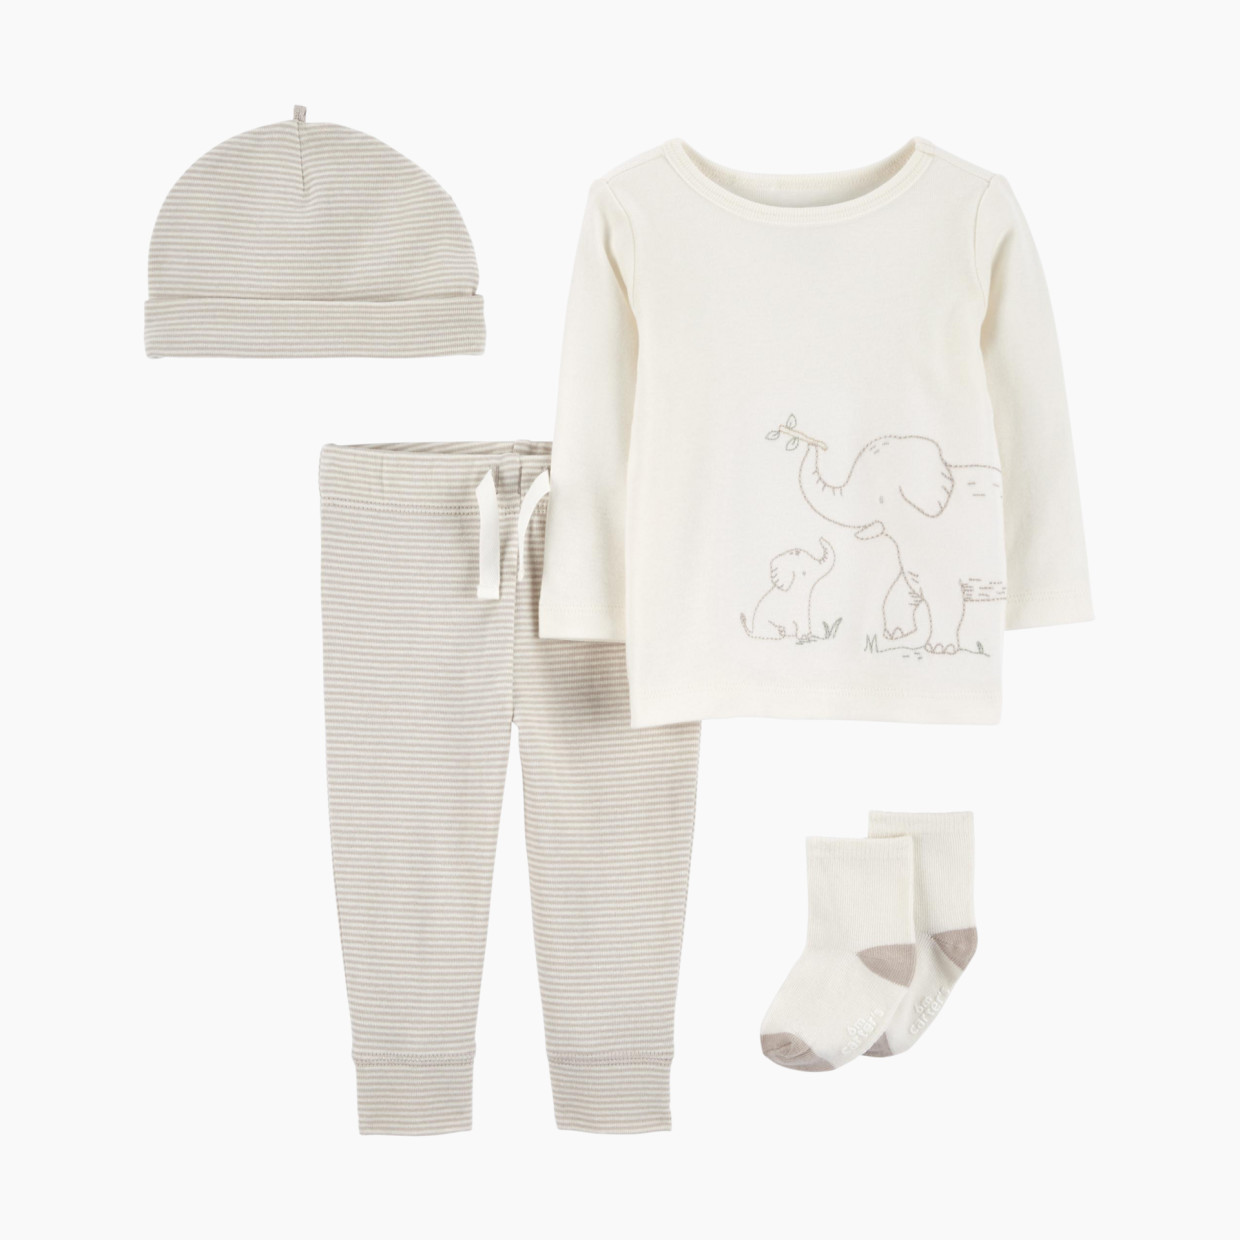 Carter's 4-Piece Elephant Outfit Set - Grey/Ivory, 9 M.